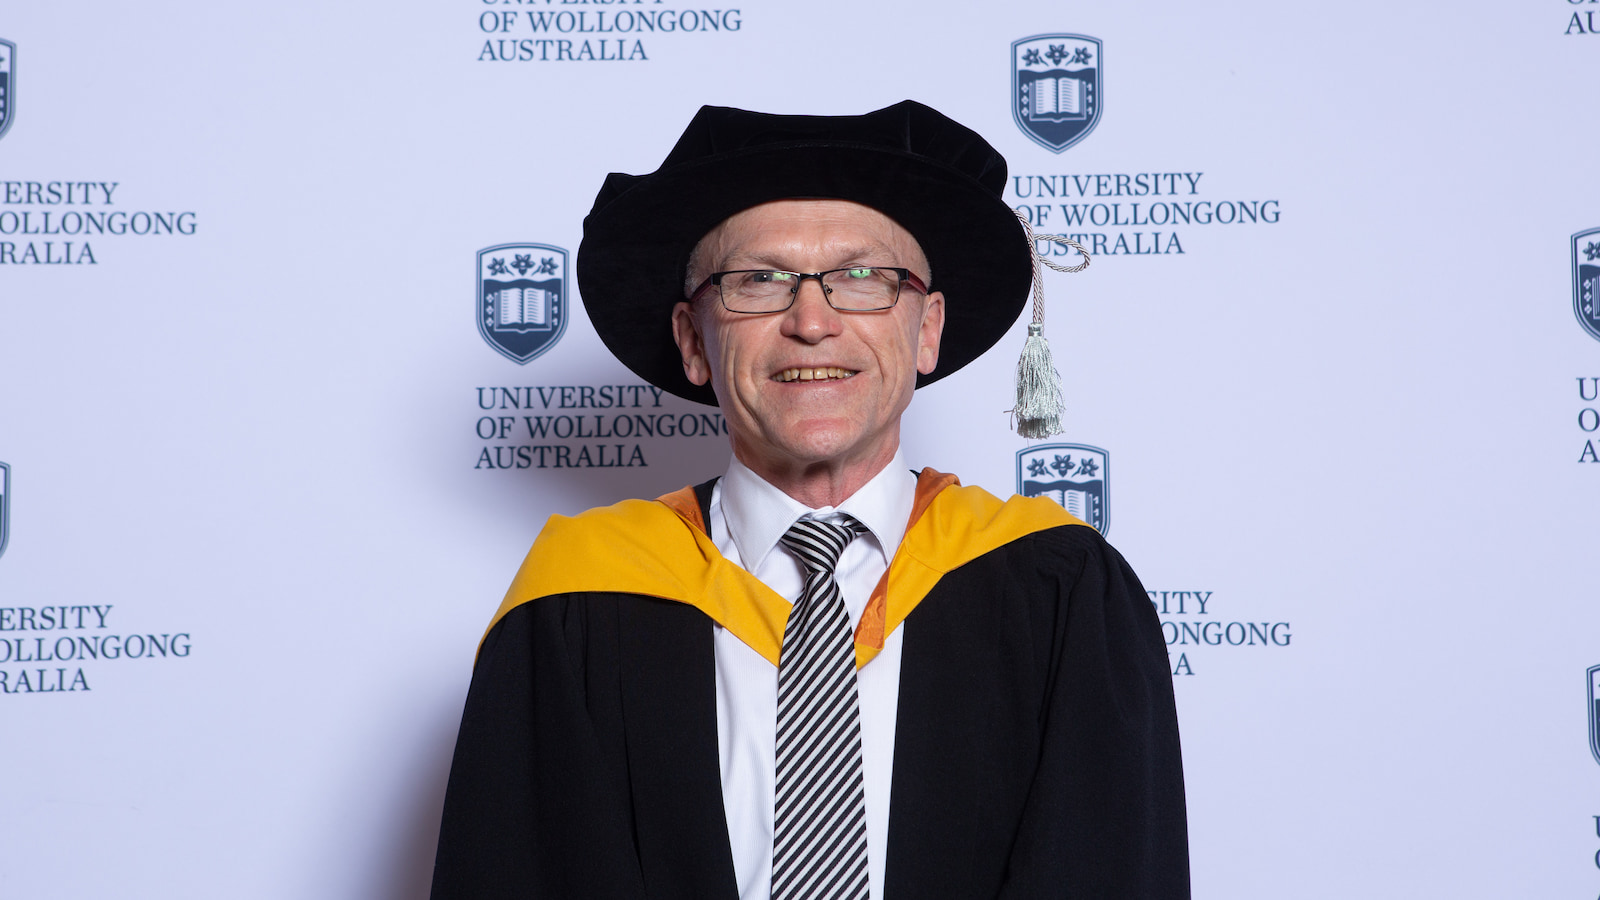 Professor Paul Cooper wears a black graduation gown and cap. Photo: Andy Zakeli